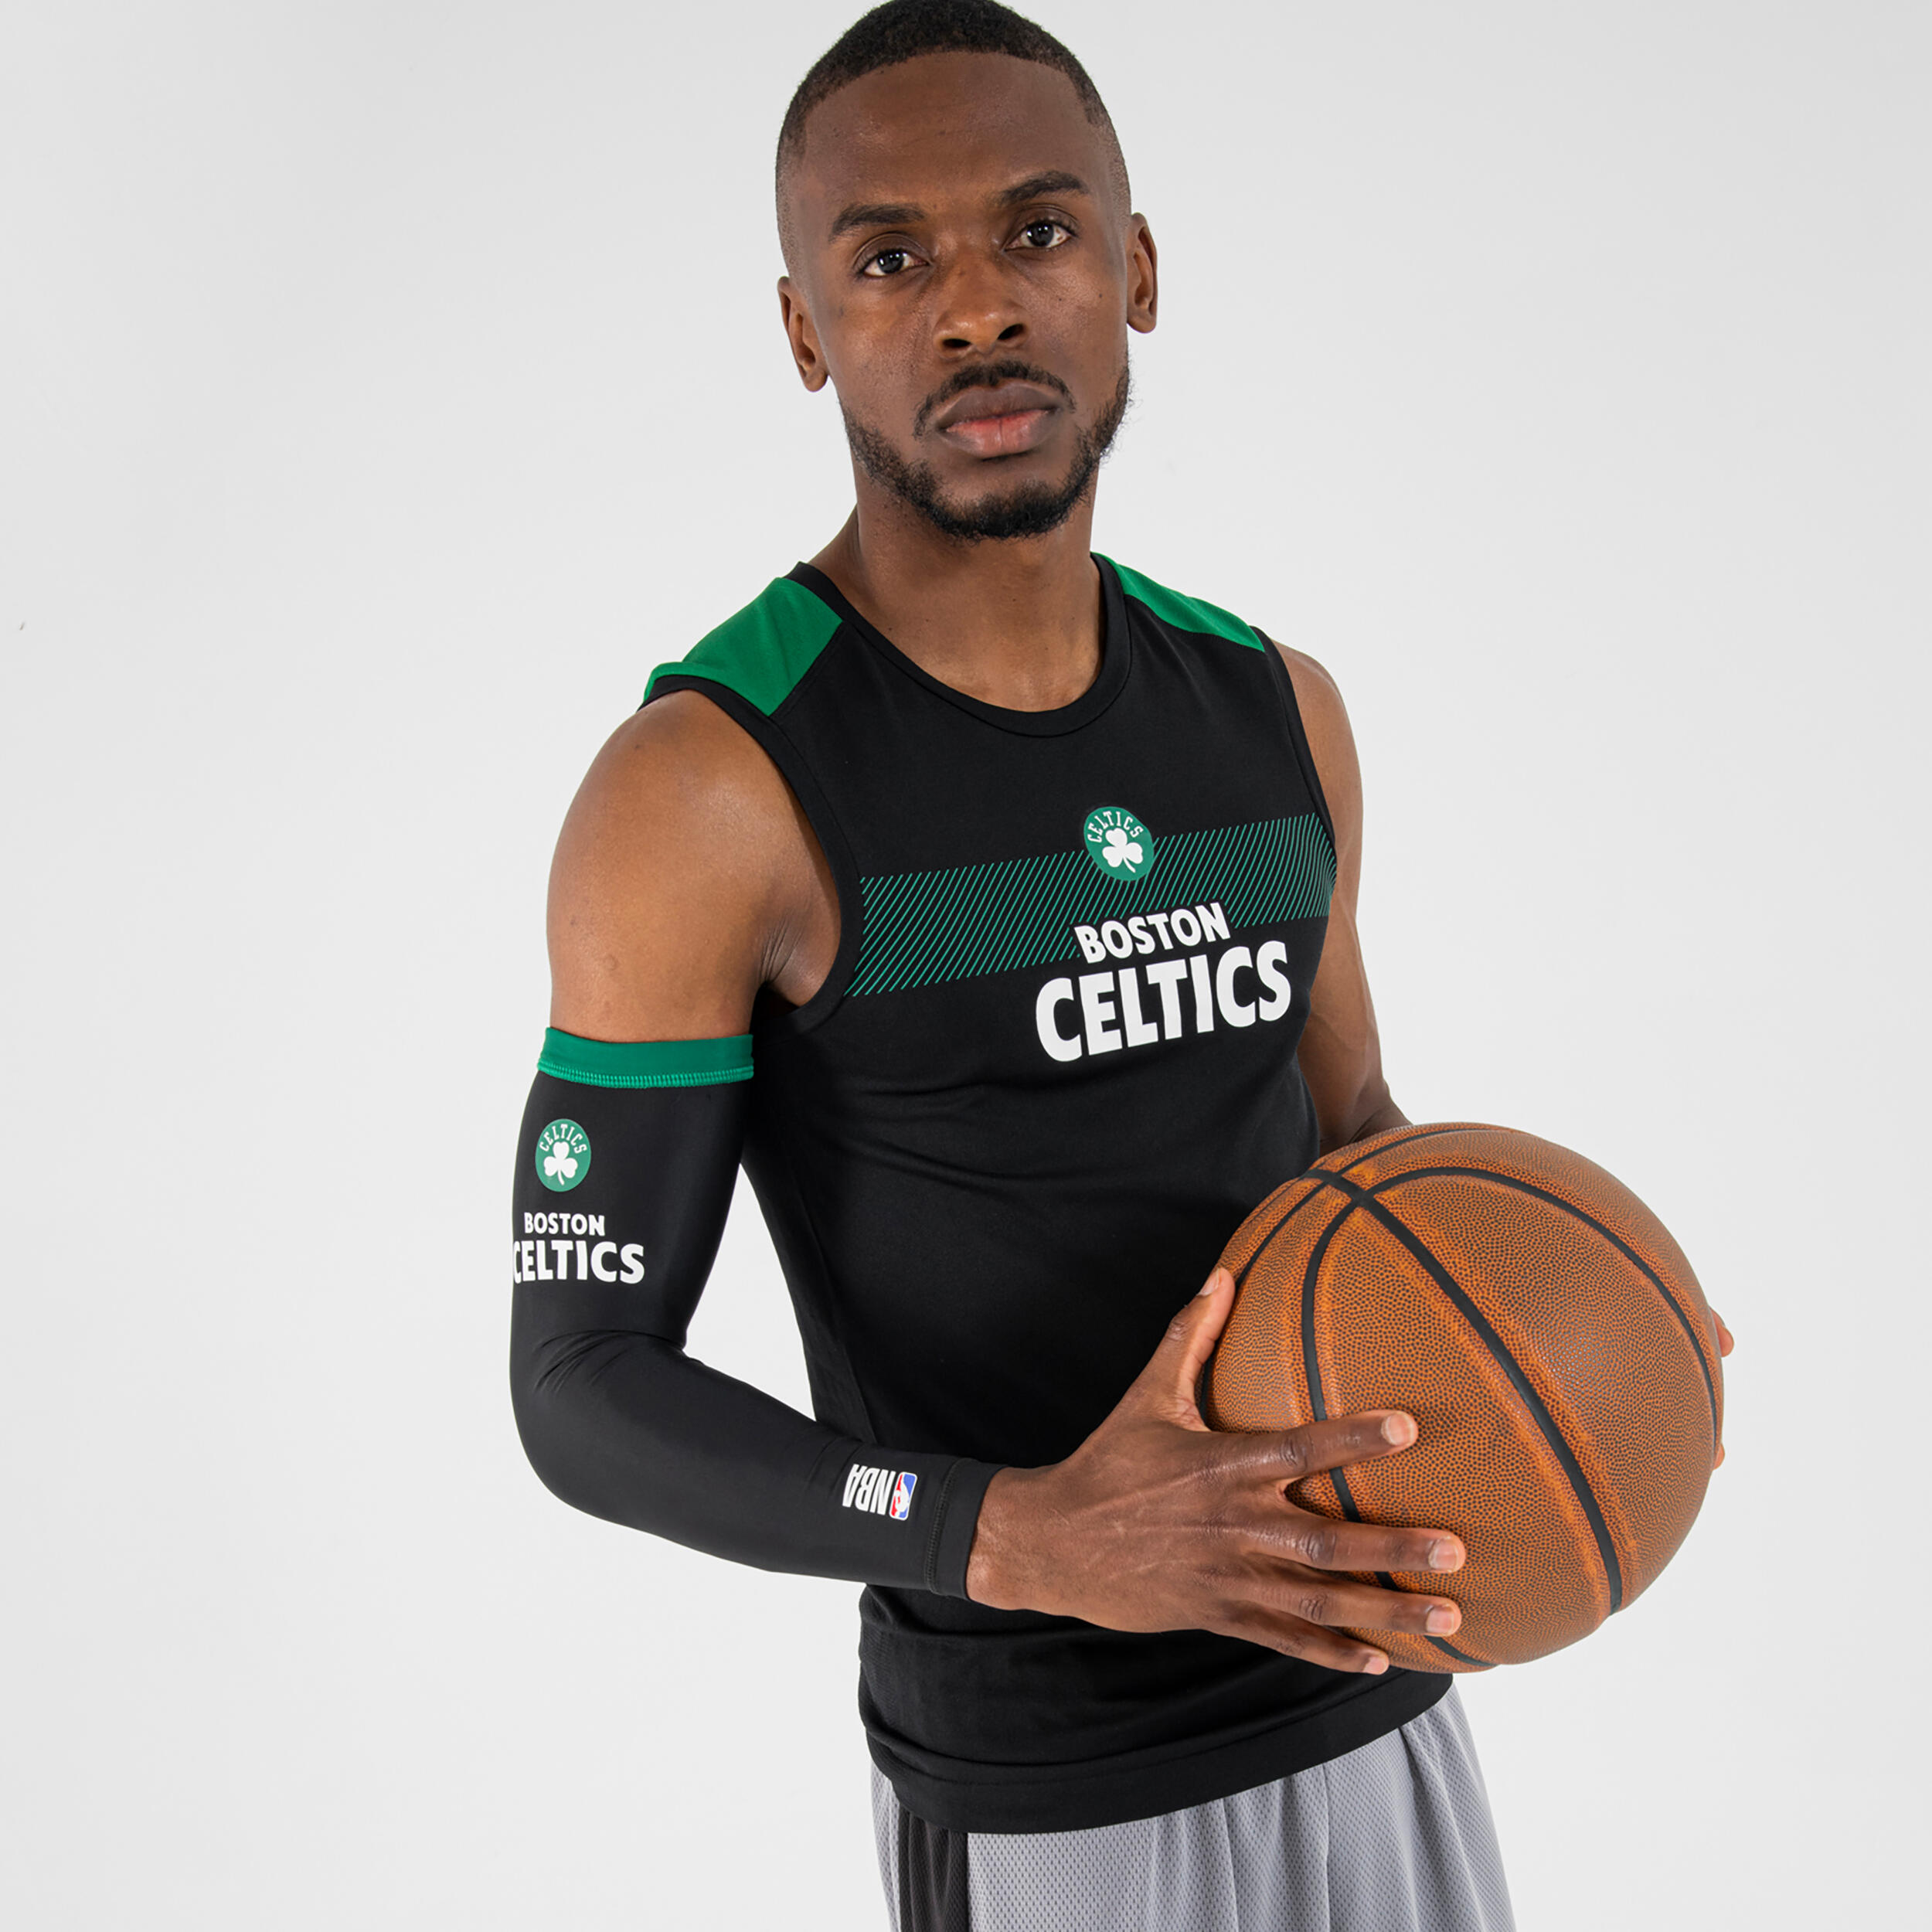 Adult Sleeveless Basketball Base Layer Jersey UT500 - NBA Boston Celtics/Black 6/9